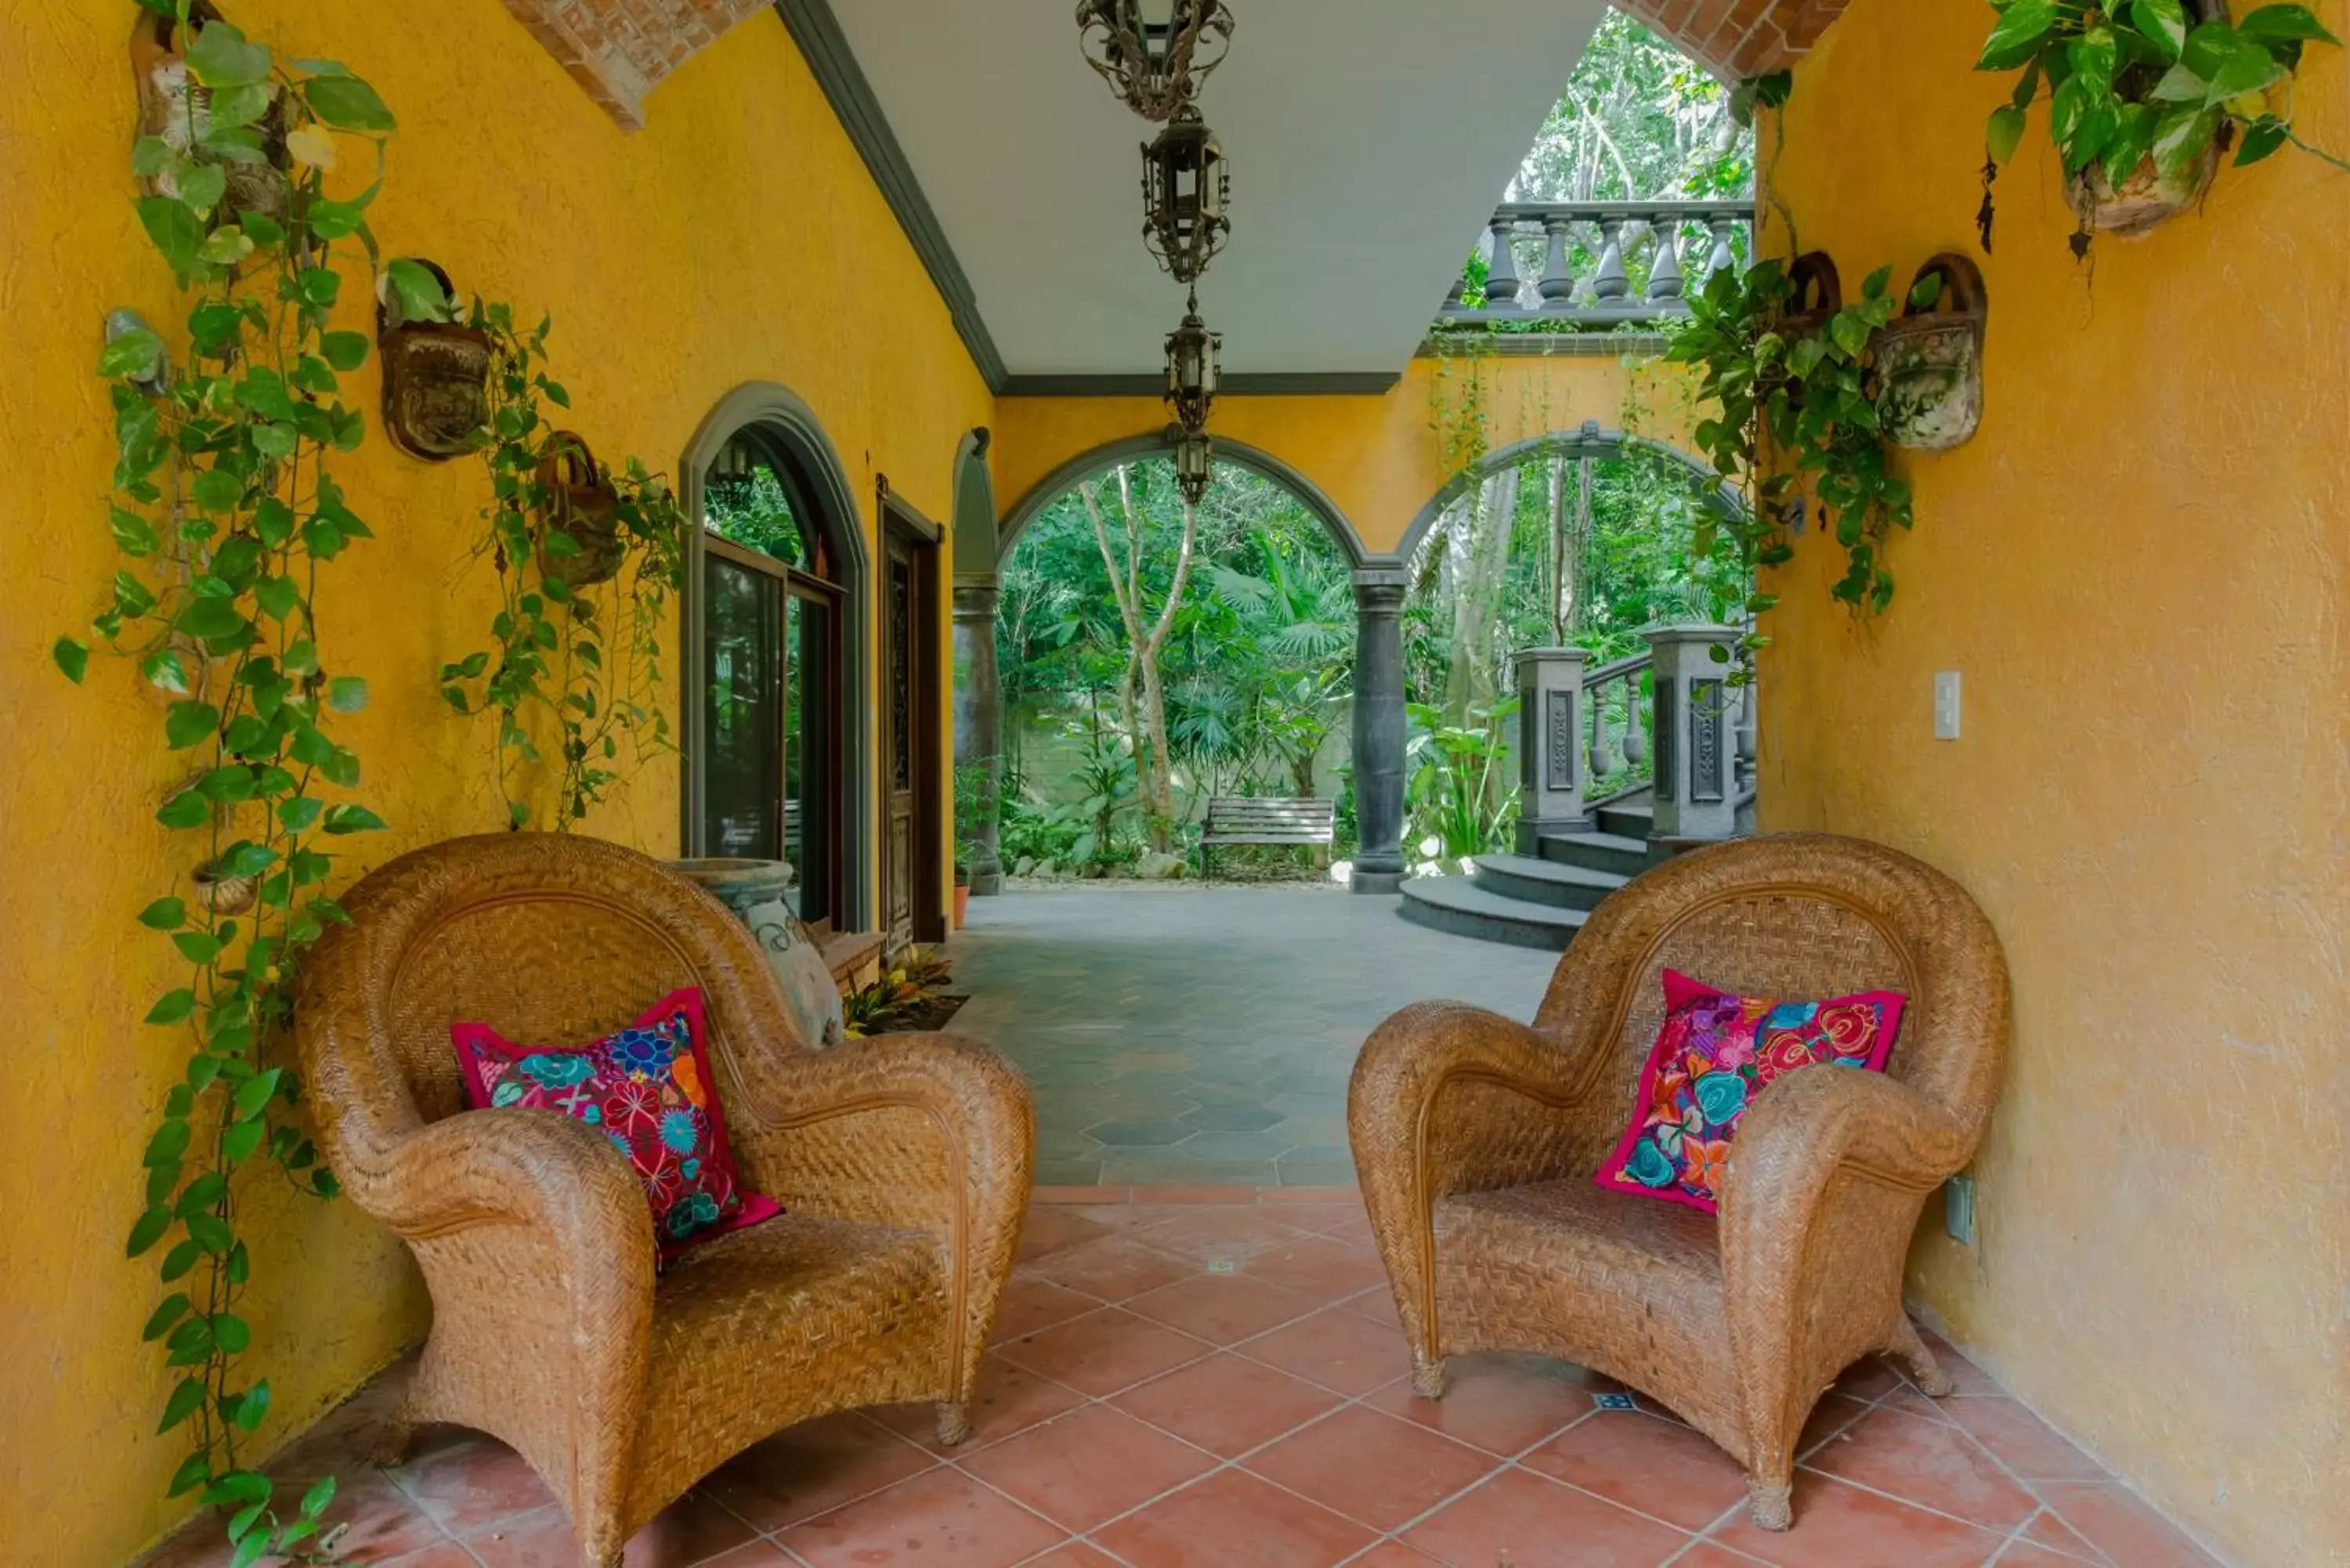 Balcony/Terrace, Seating Area in Hacienda Xcaret